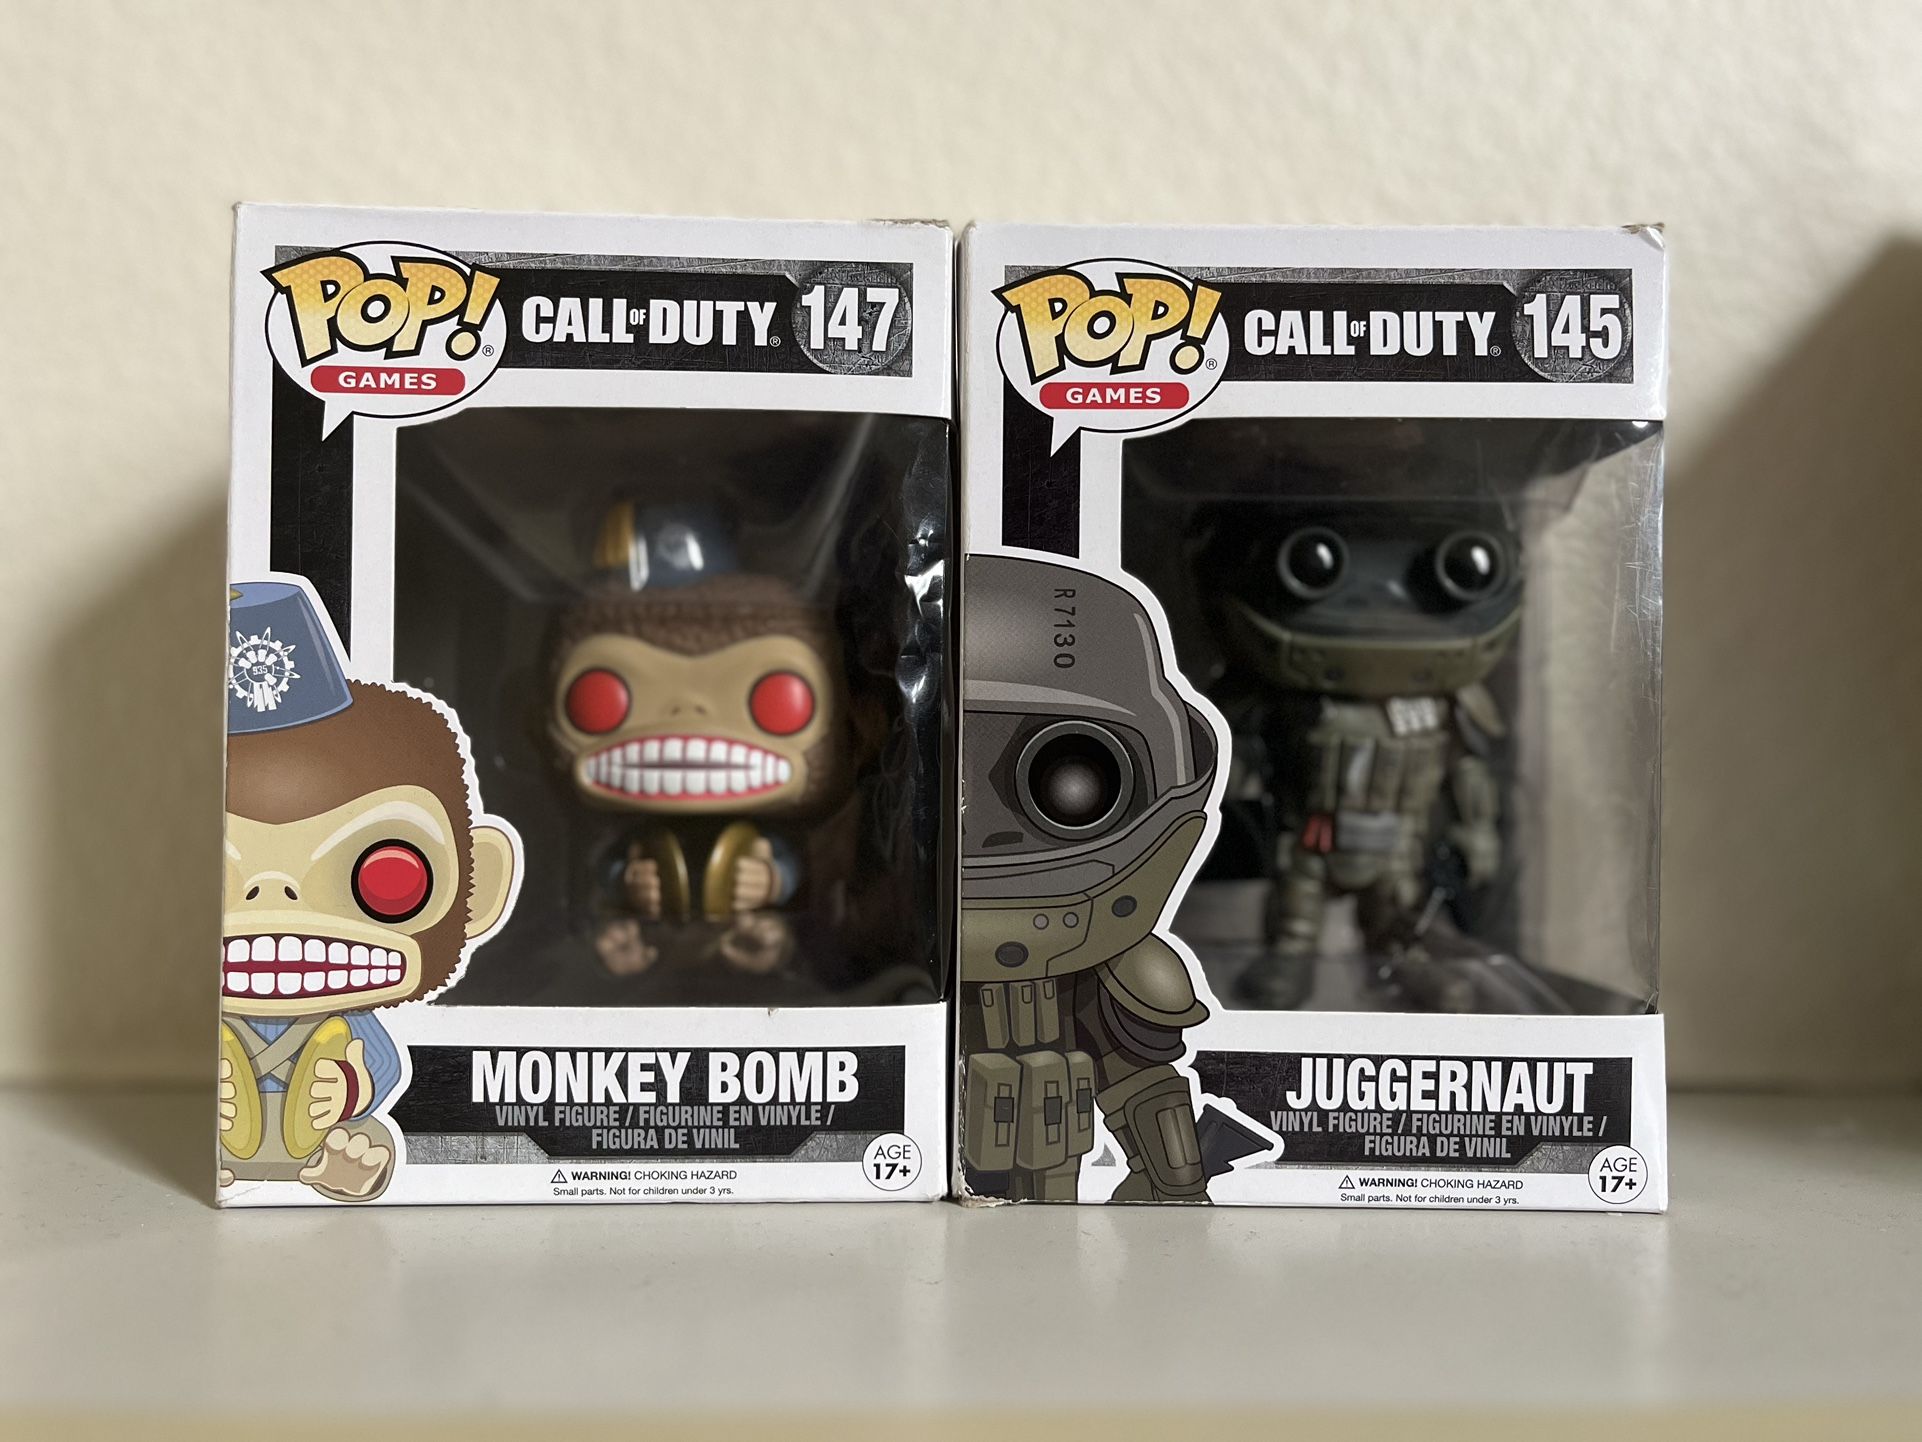 Juggernaut and Monkey Bomb